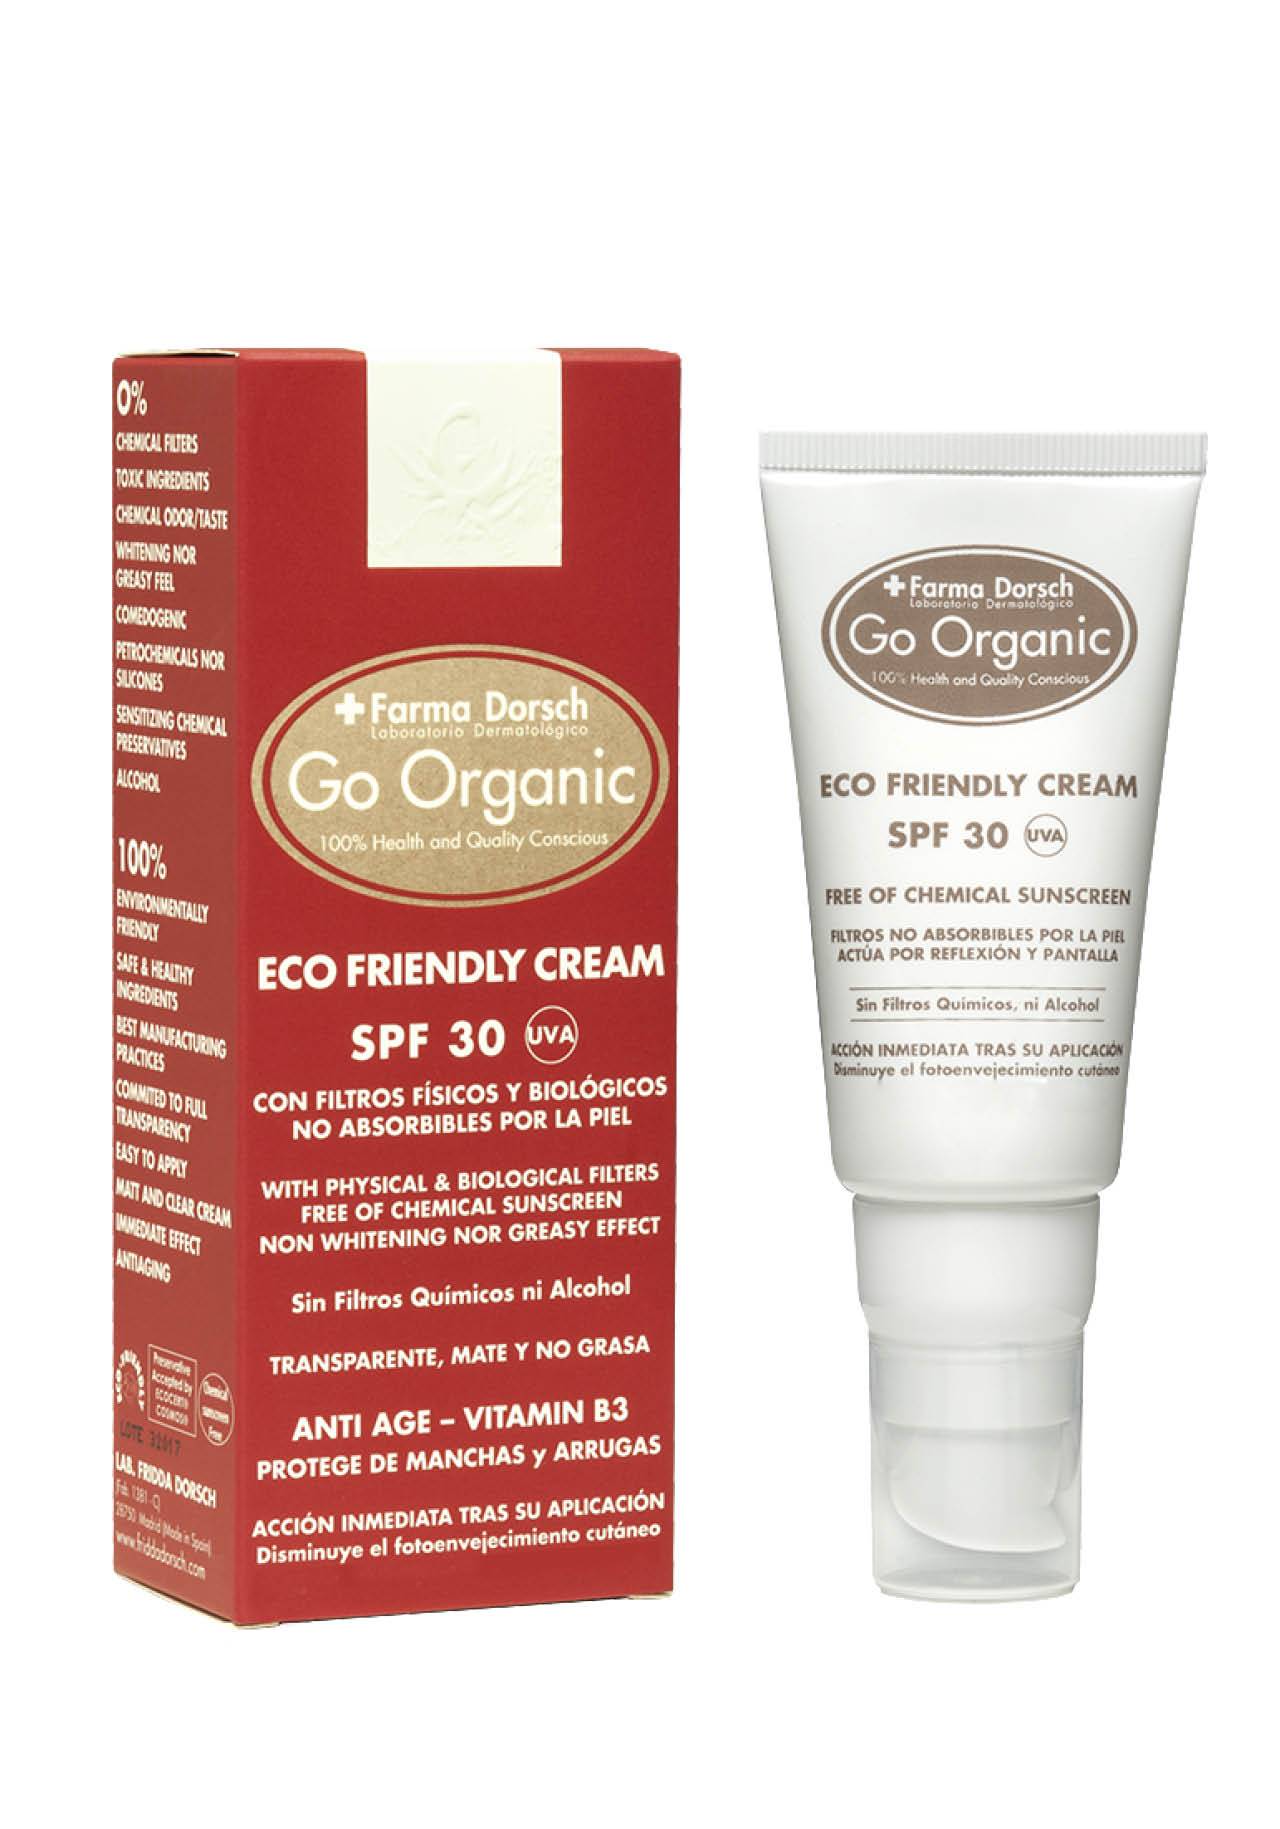 Cosmética con vitaminas GoOrganic Eco Friendly Cream FPS30 de +Farma Dorsch